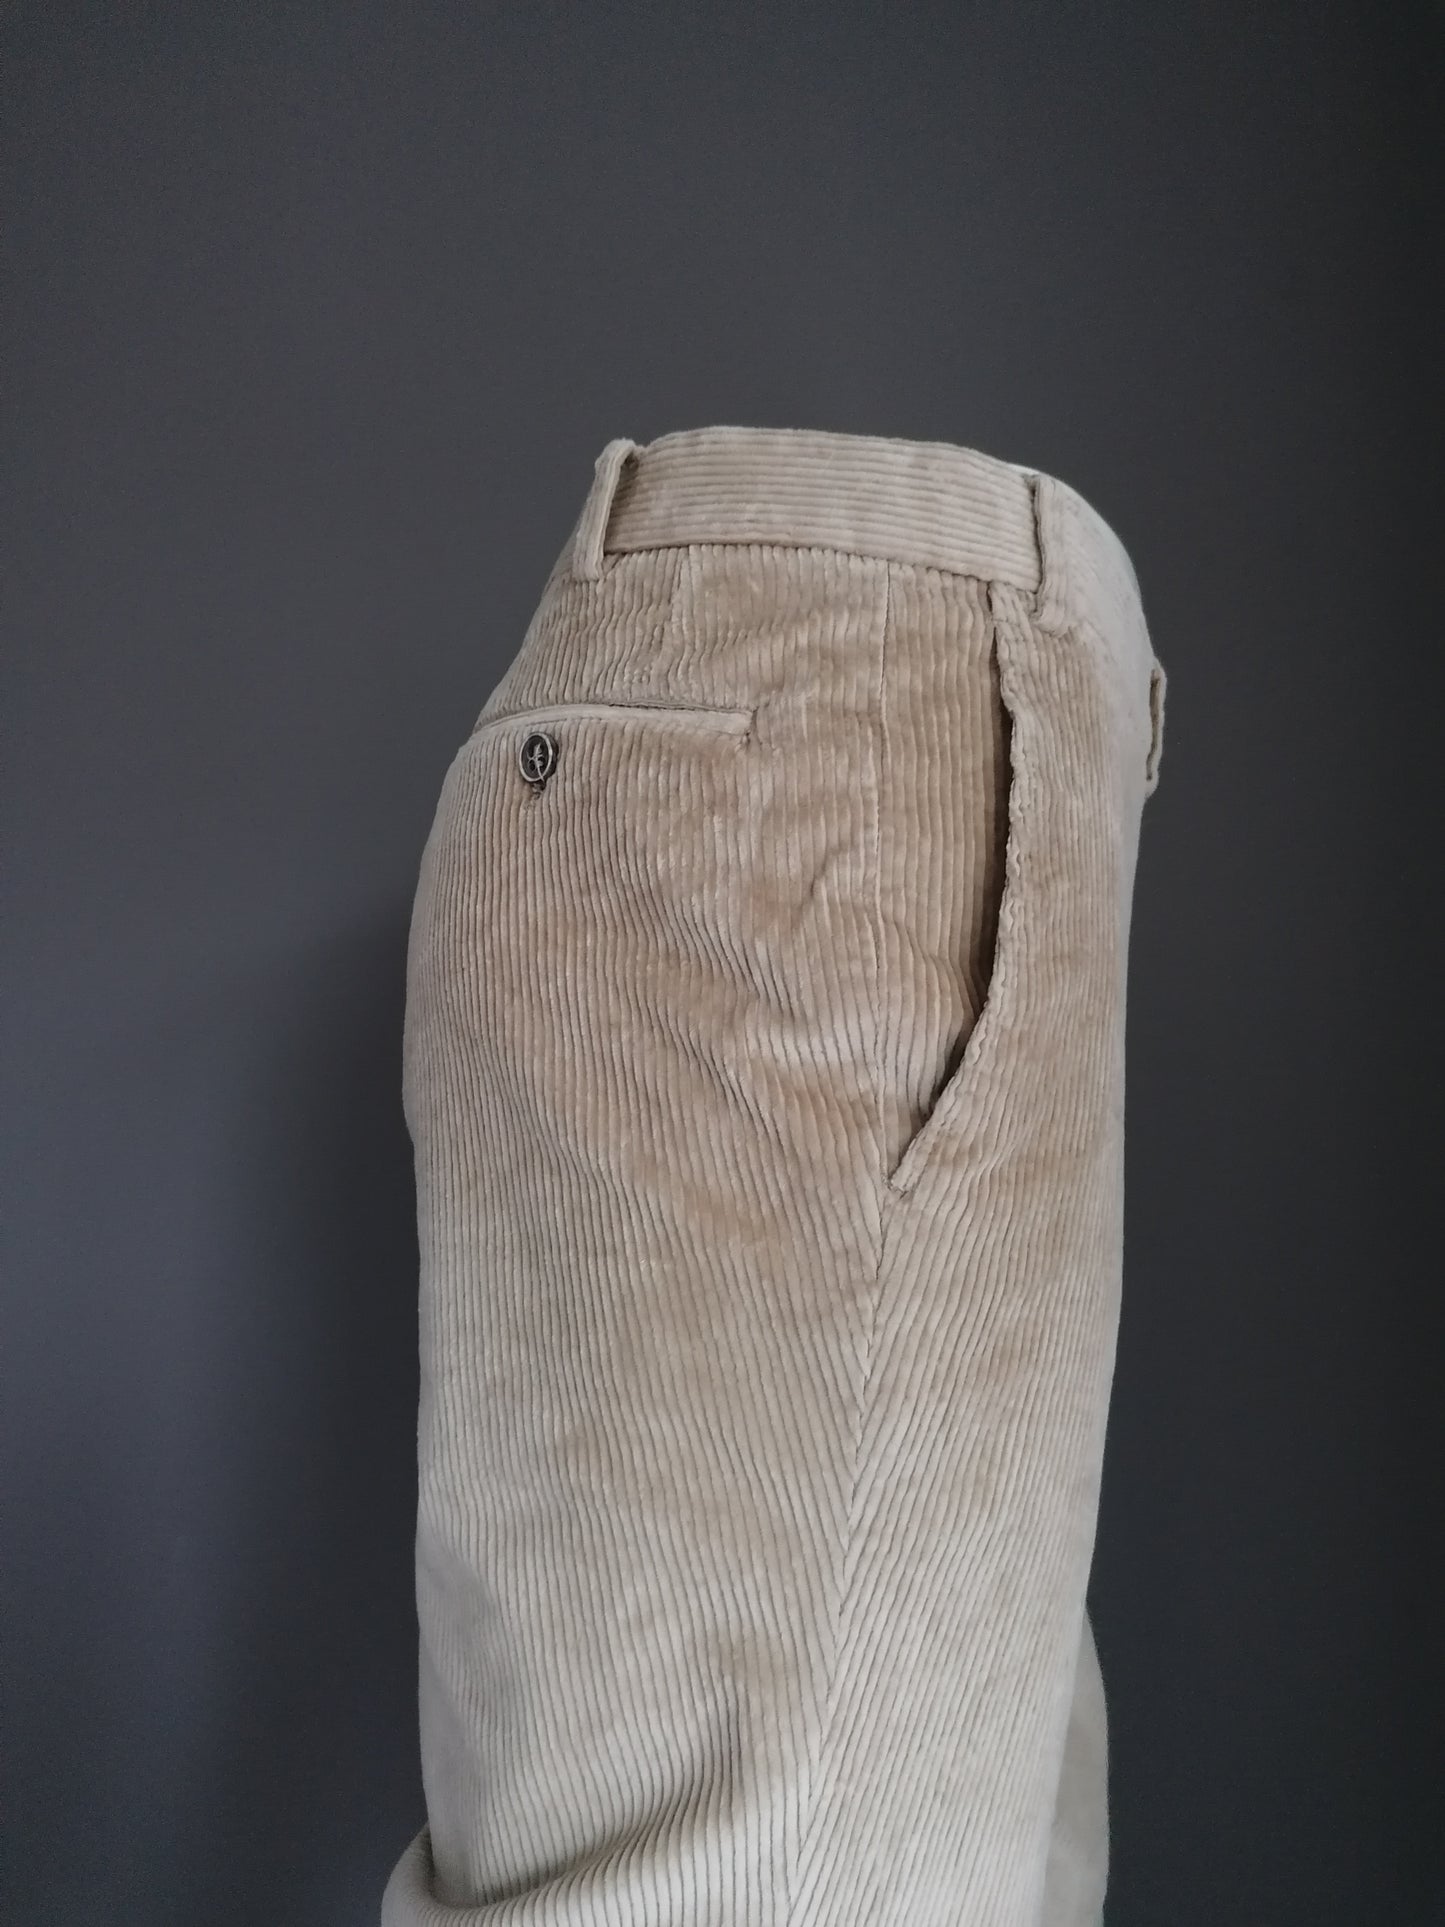 Hiltl rib pants / trousers. Light brown colored. Size 54 / L